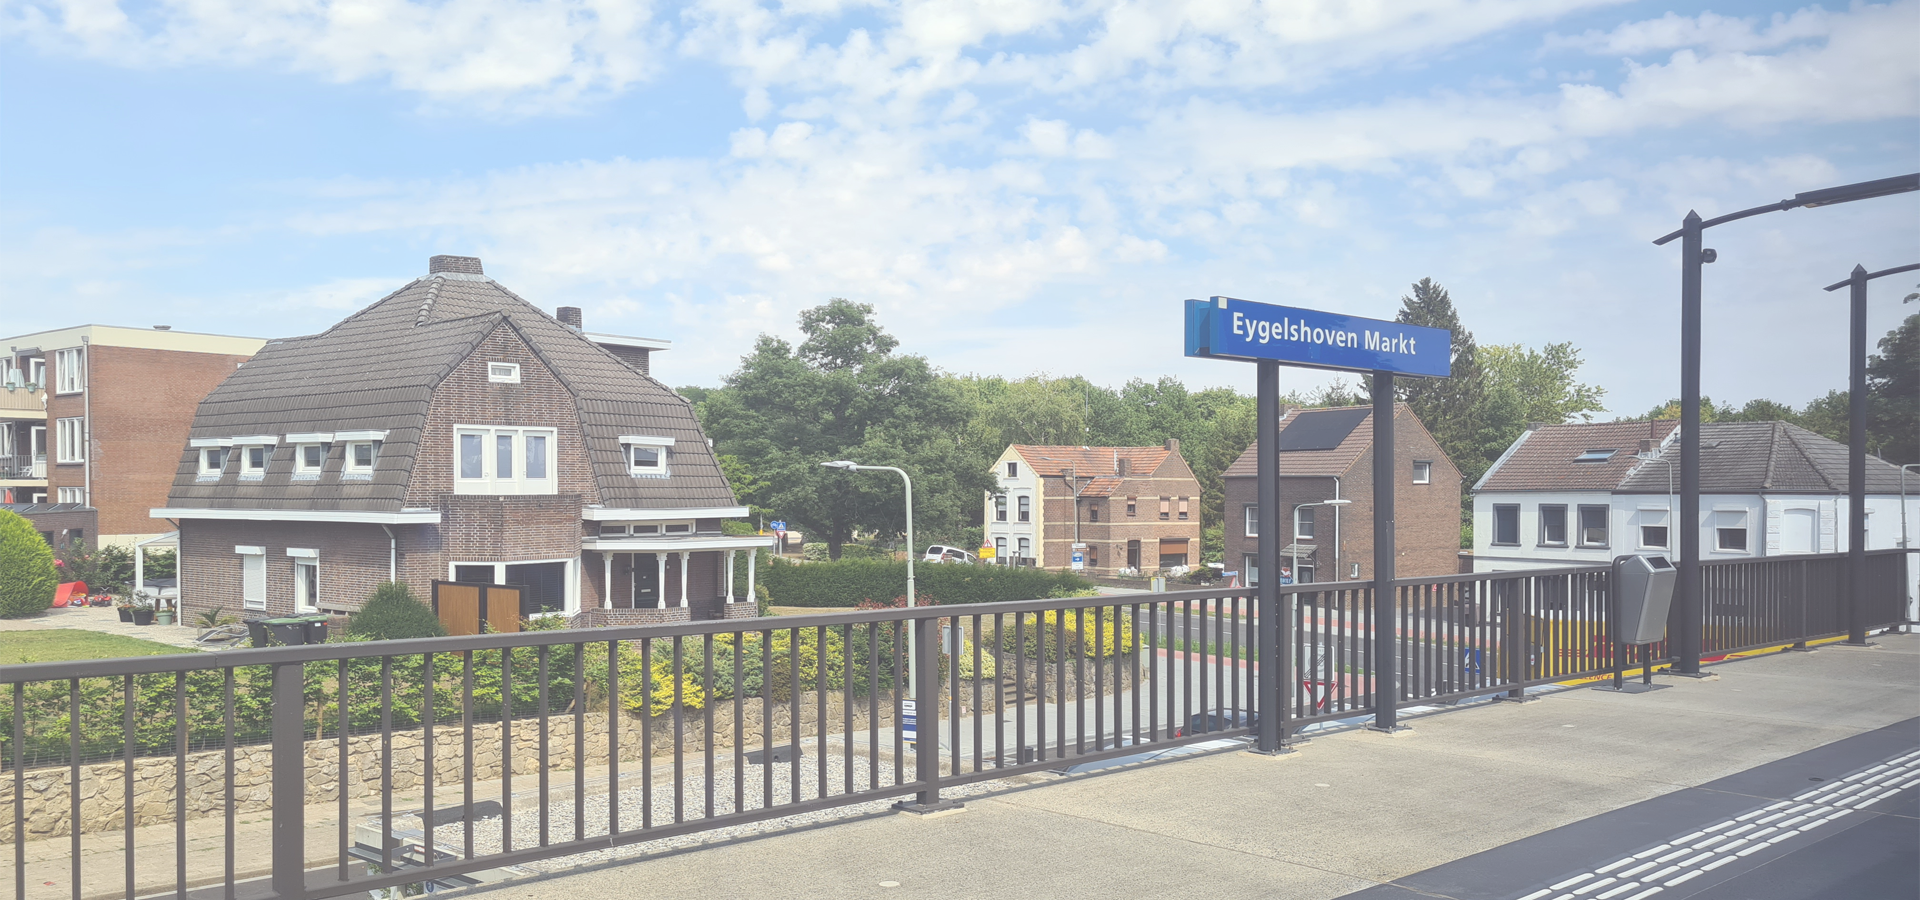 <b>Eygelshoven, Limburg Province, Netherlands</b>